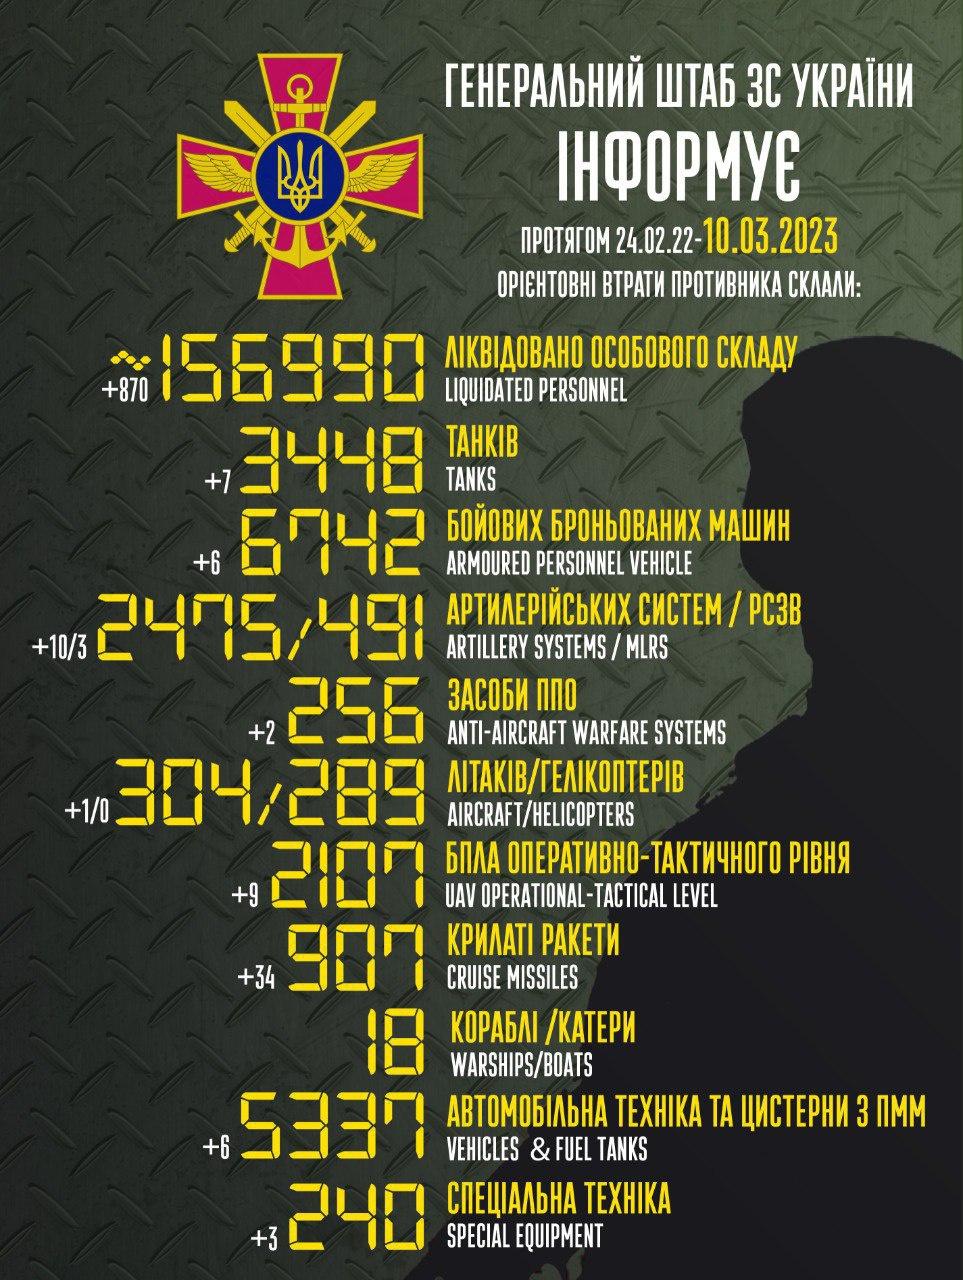 Russia’s losses in Ukraine as of 10/03/2023